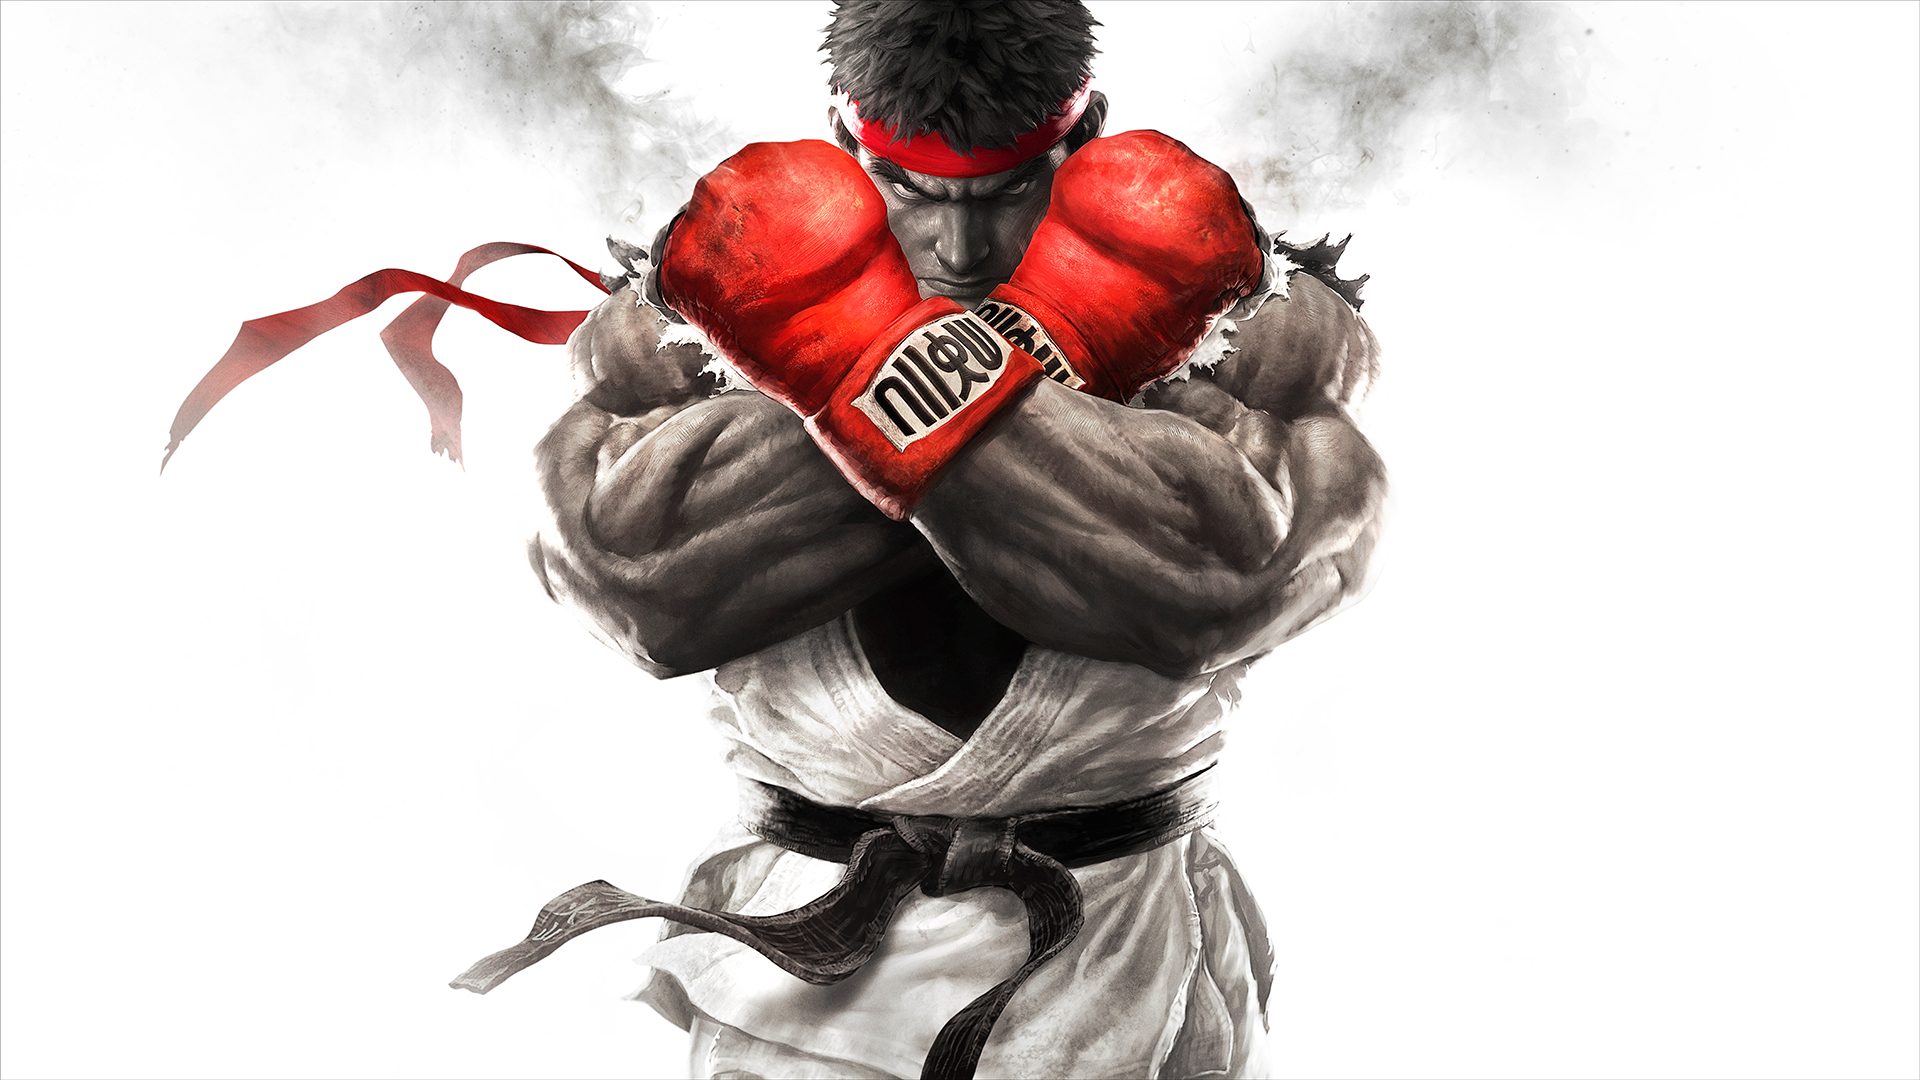 Street Fighter V Windows, PS4 game - Mod DB